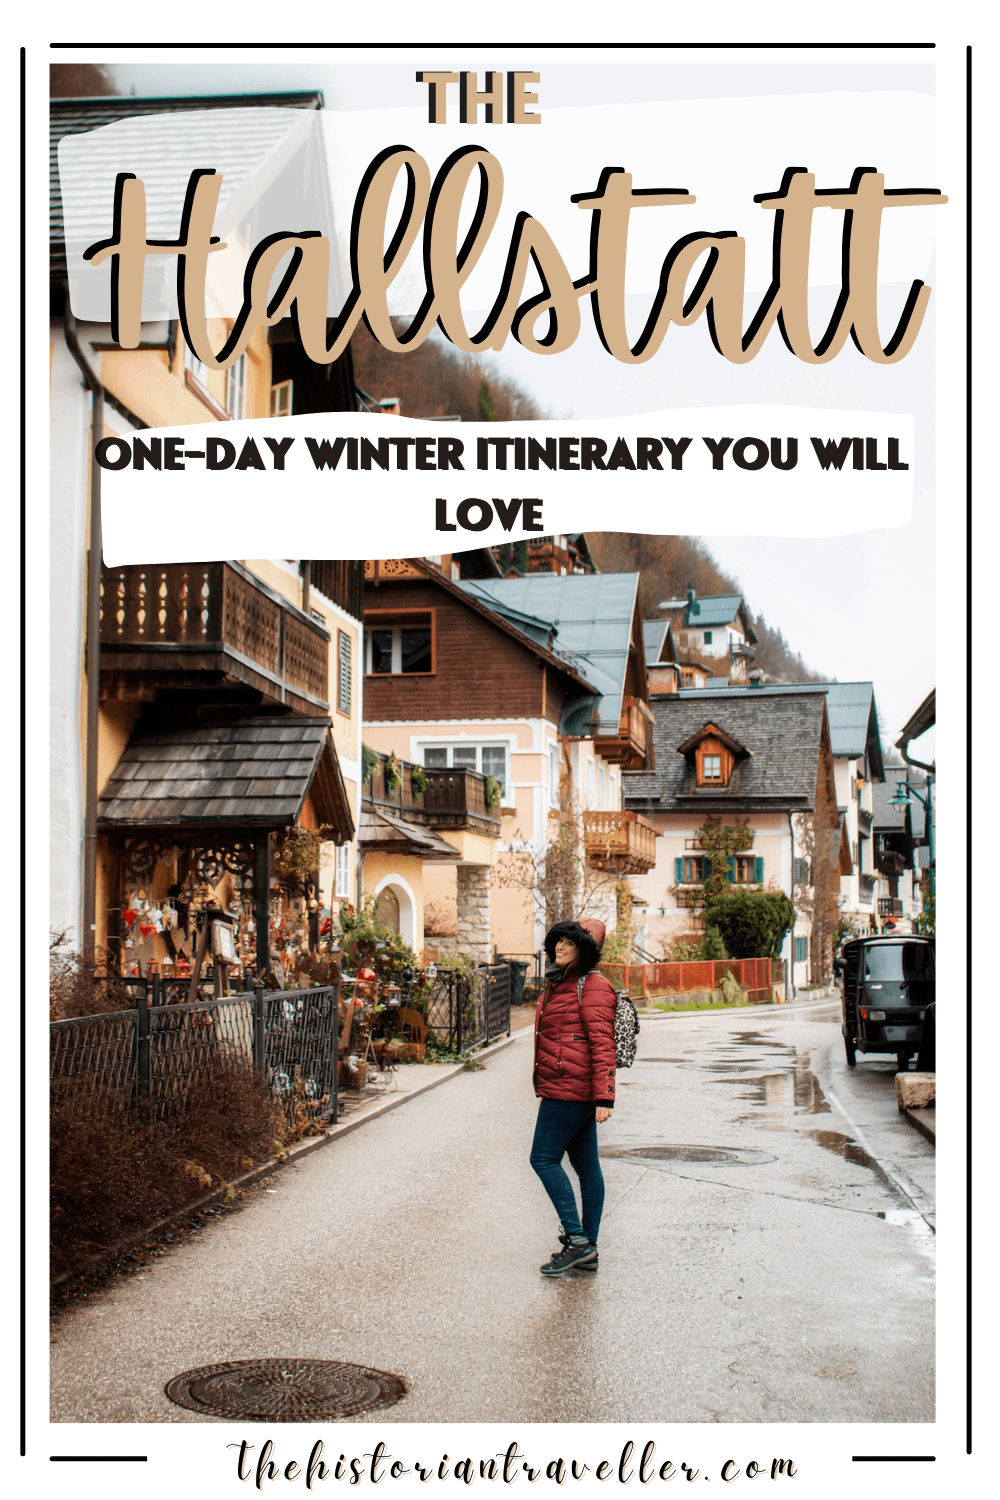 Hallstatt one-day winter itinerary 